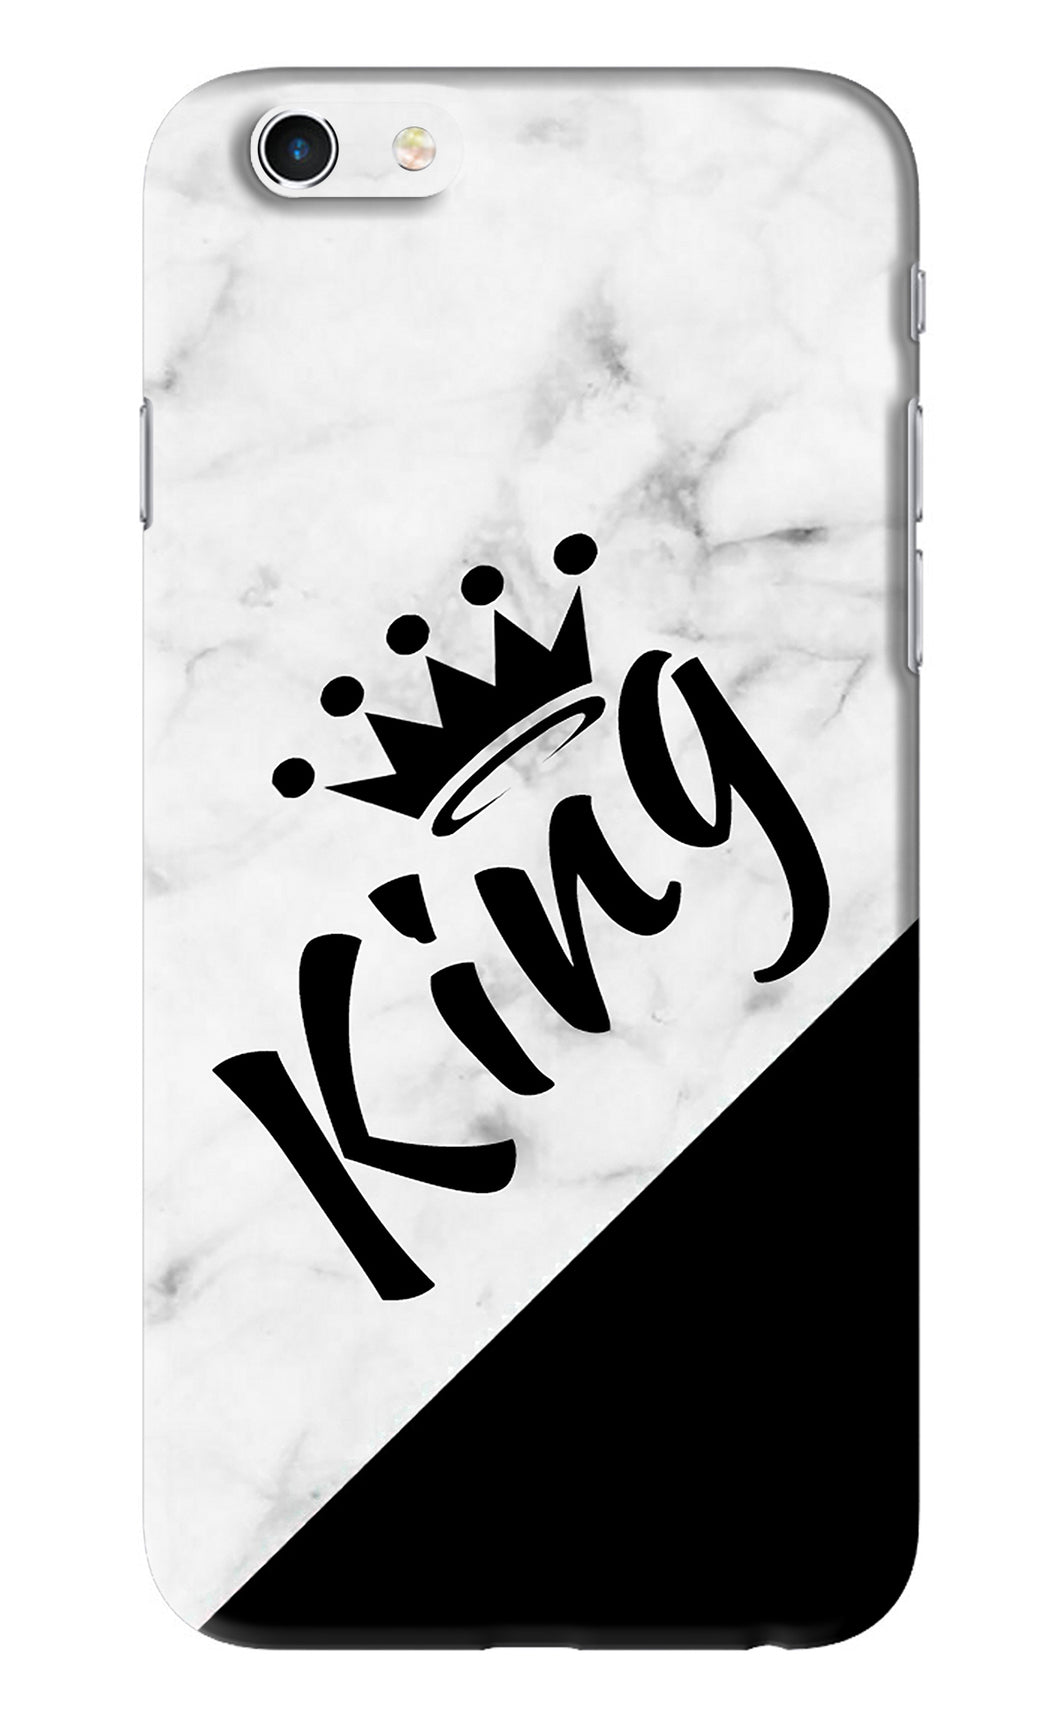 King iPhone 6 Back Skin Wrap